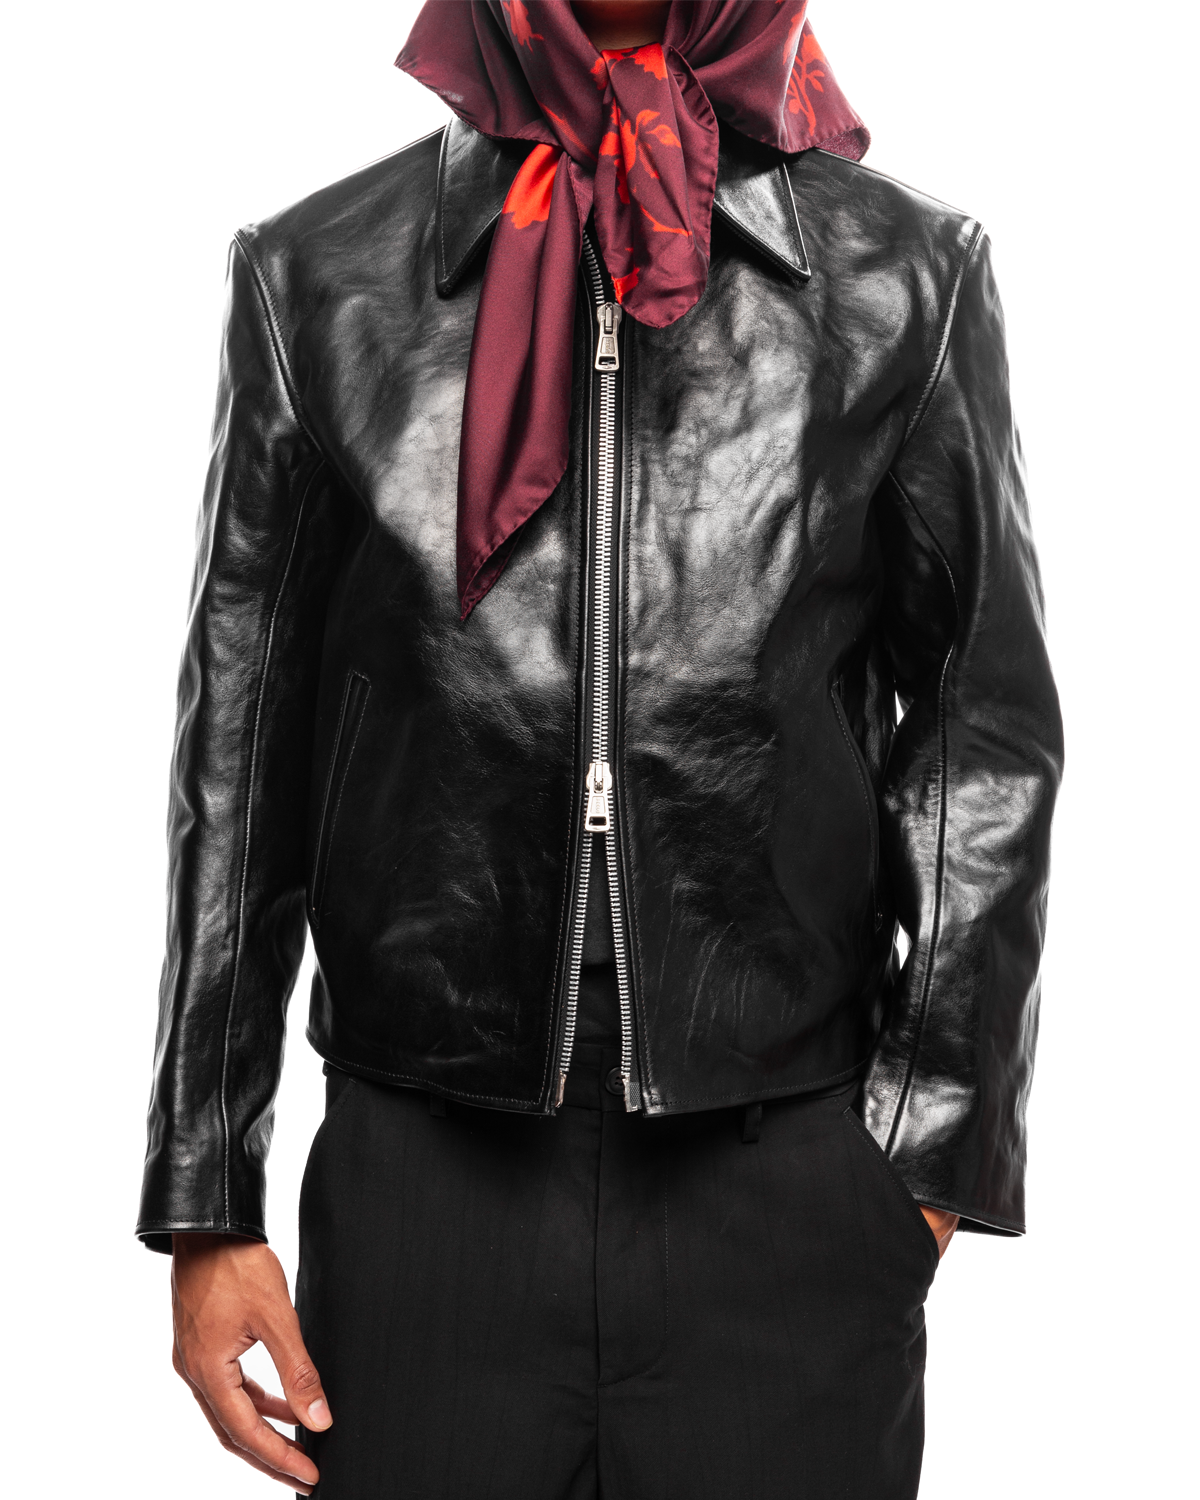 Mini Jacket Top Dyed Black Leather